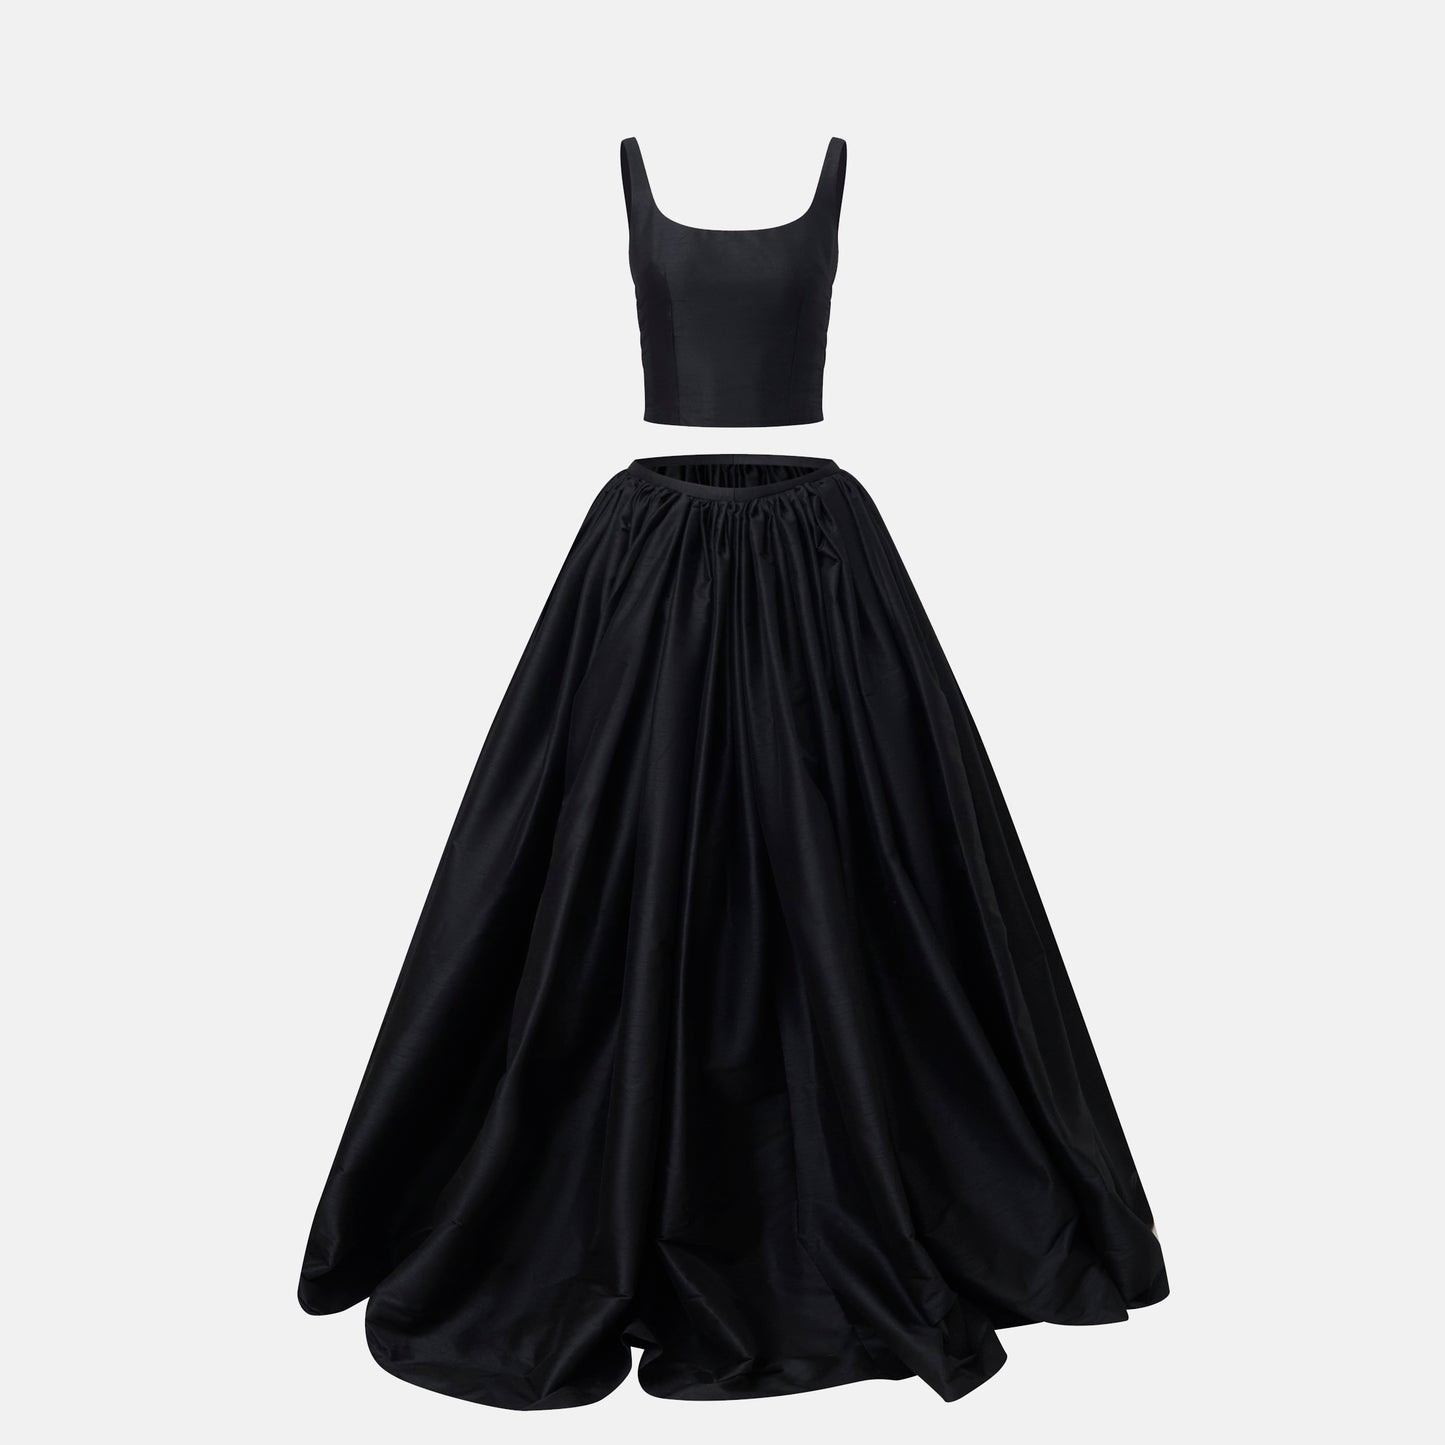 Devon Top & Skirt - Black